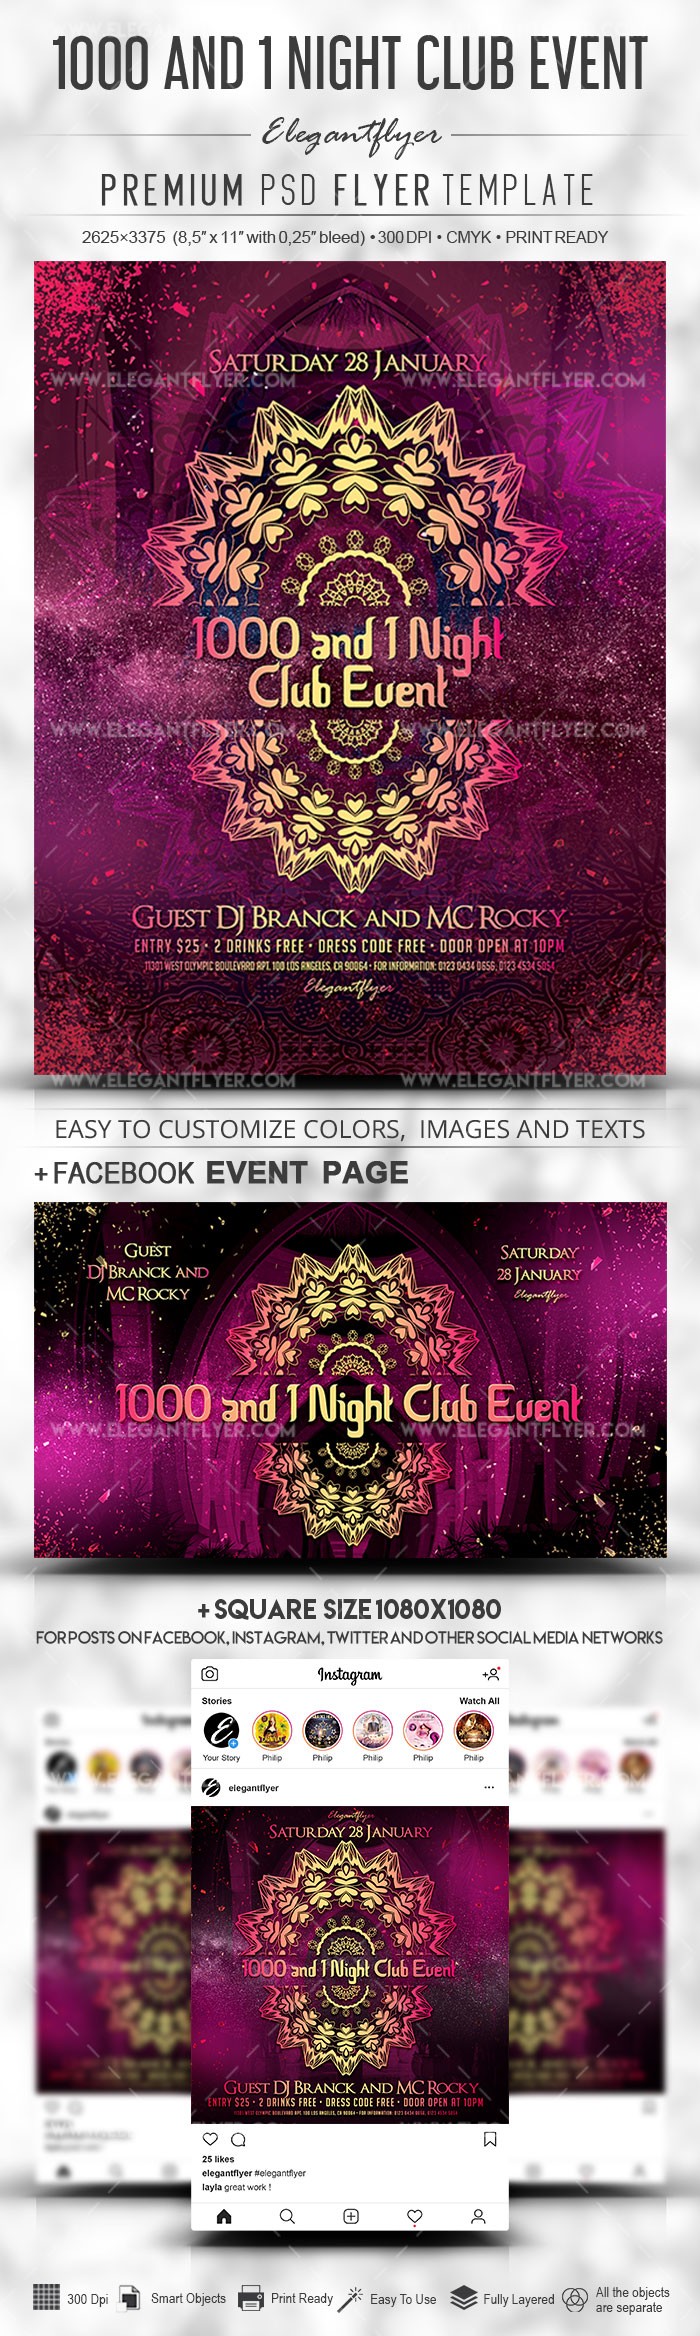 1000 and 1 Night Club Event by ElegantFlyer